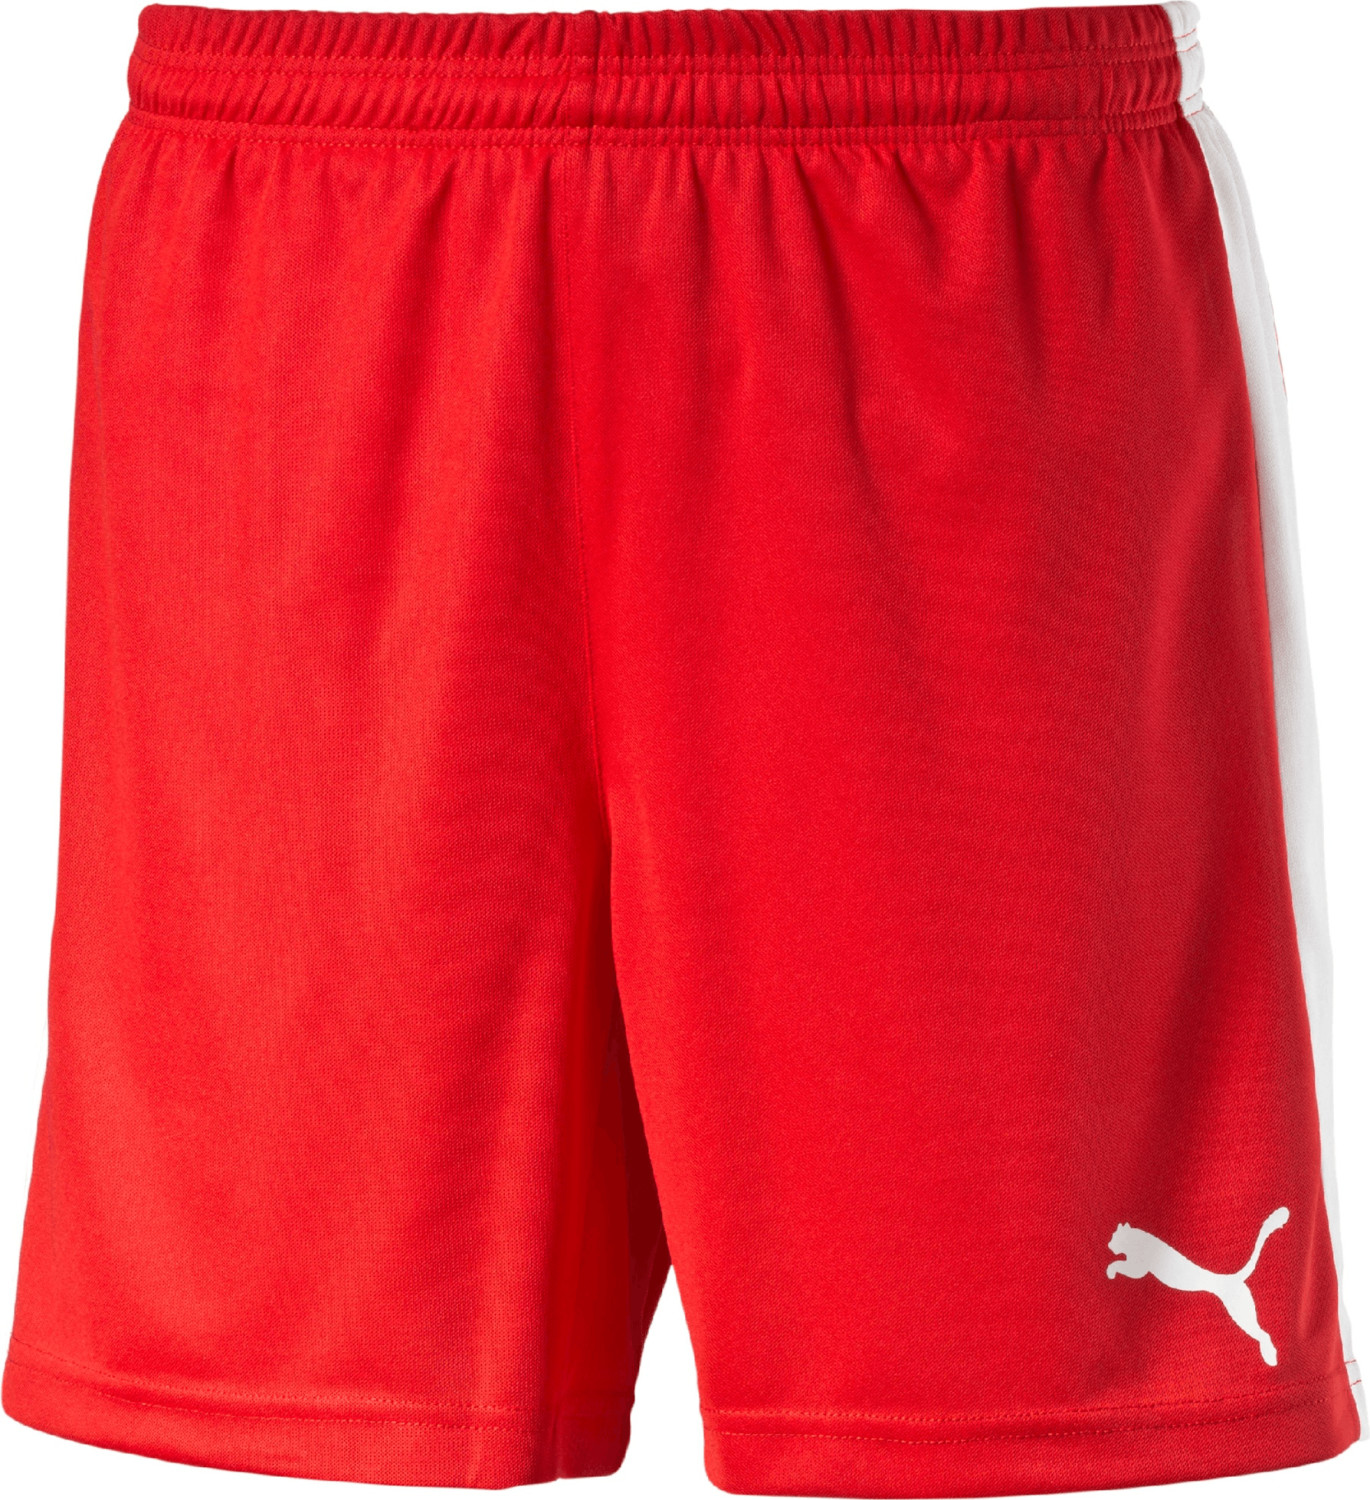 Puma Football Shorts puma red/white